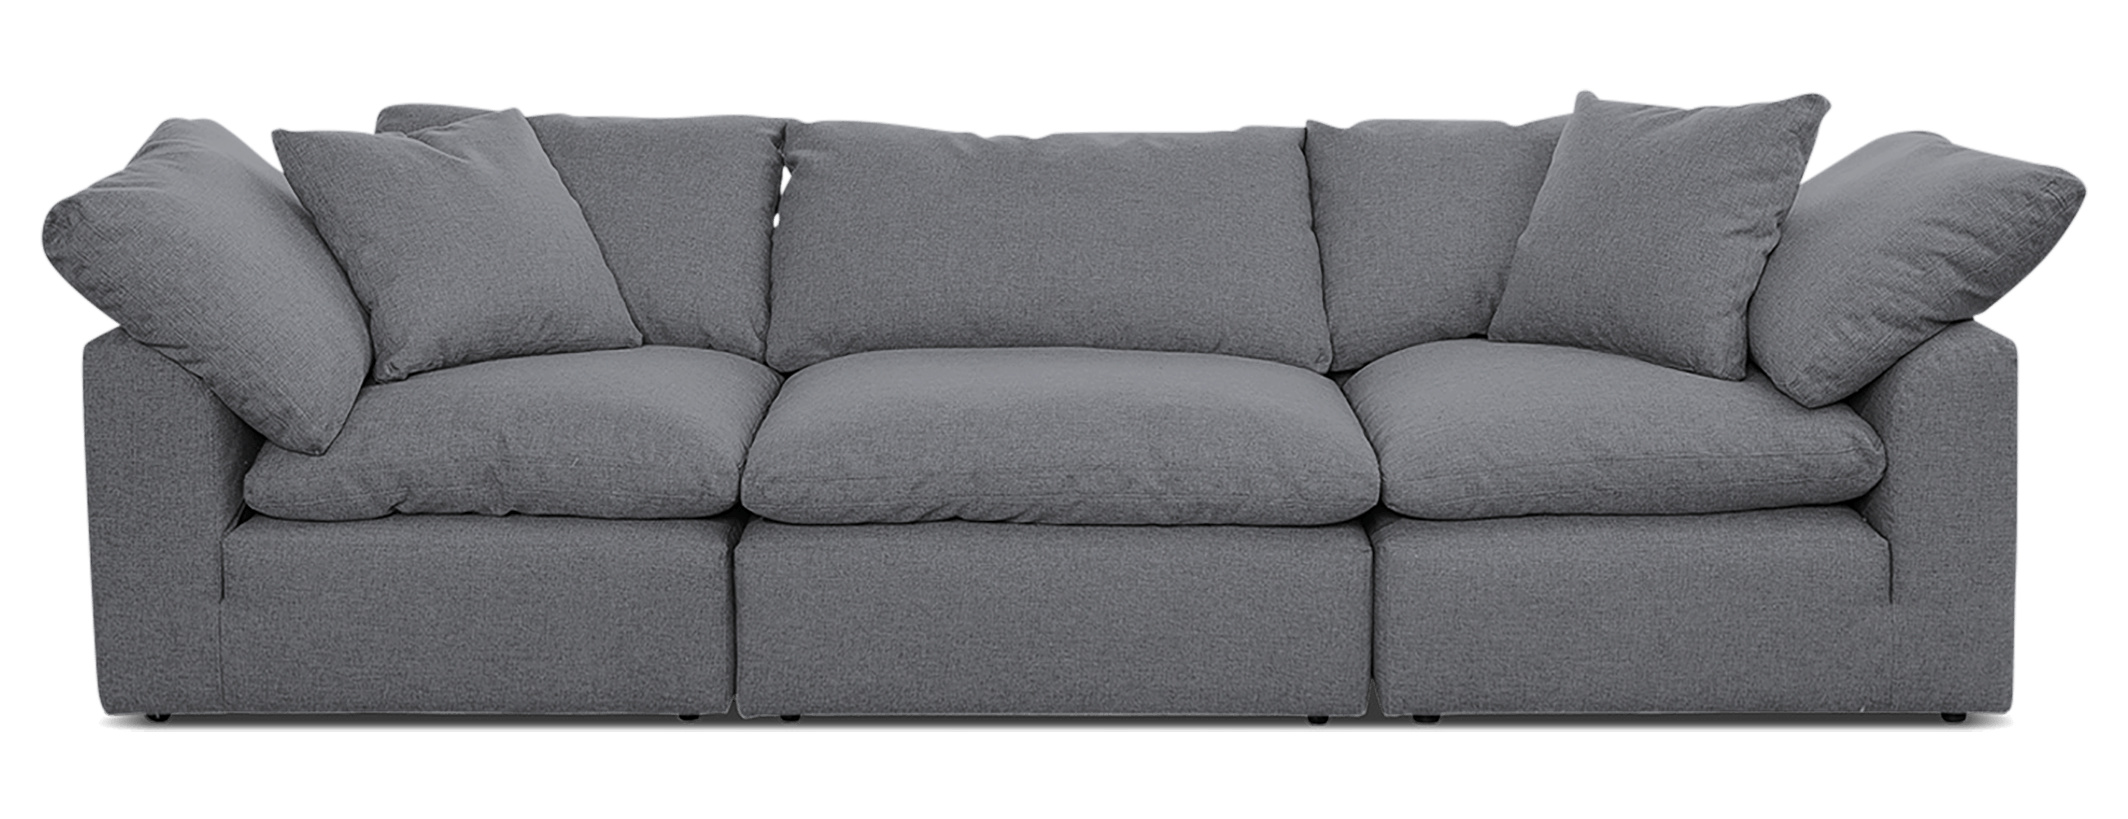 bryant modular sofa %283 piece%29 essence ash